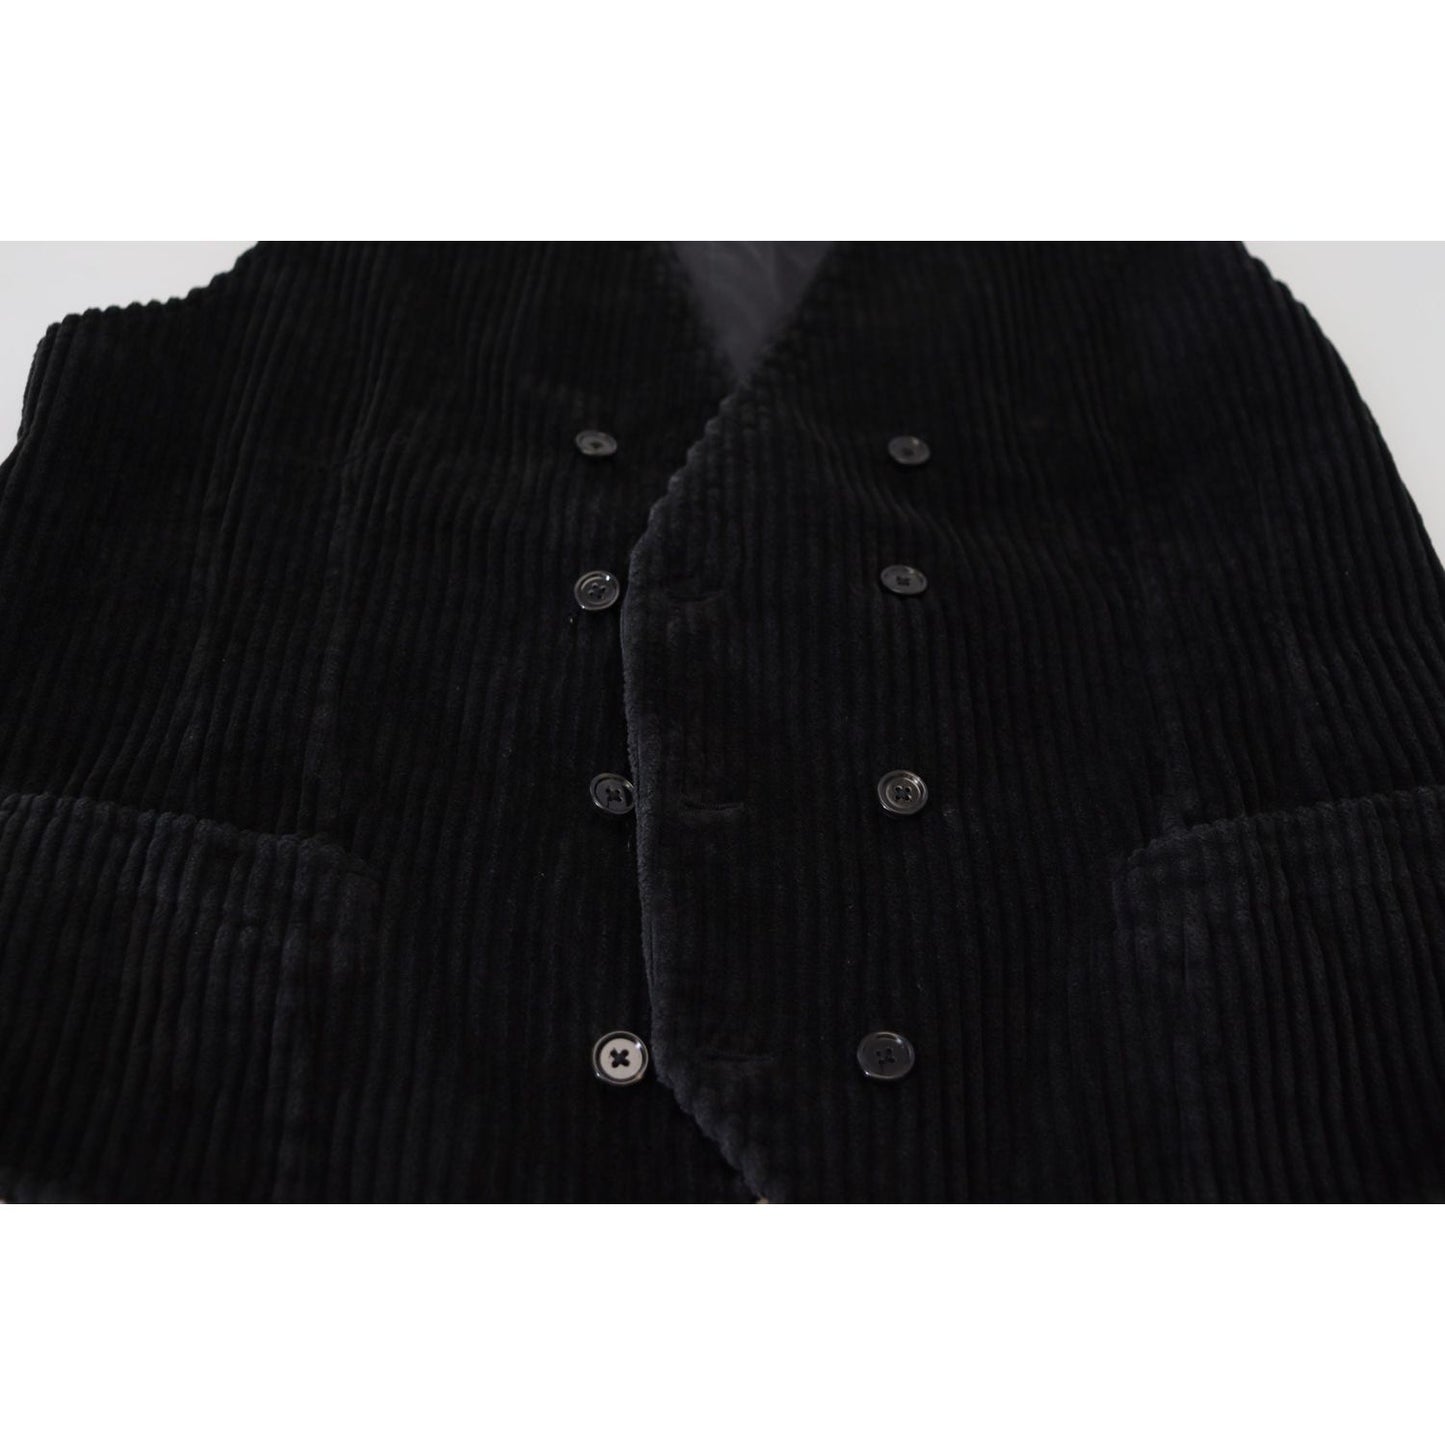 Dolce & Gabbana Elegant Black Double Breasted Dress Vest black-cotton-double-breasted-waistcoat-vest